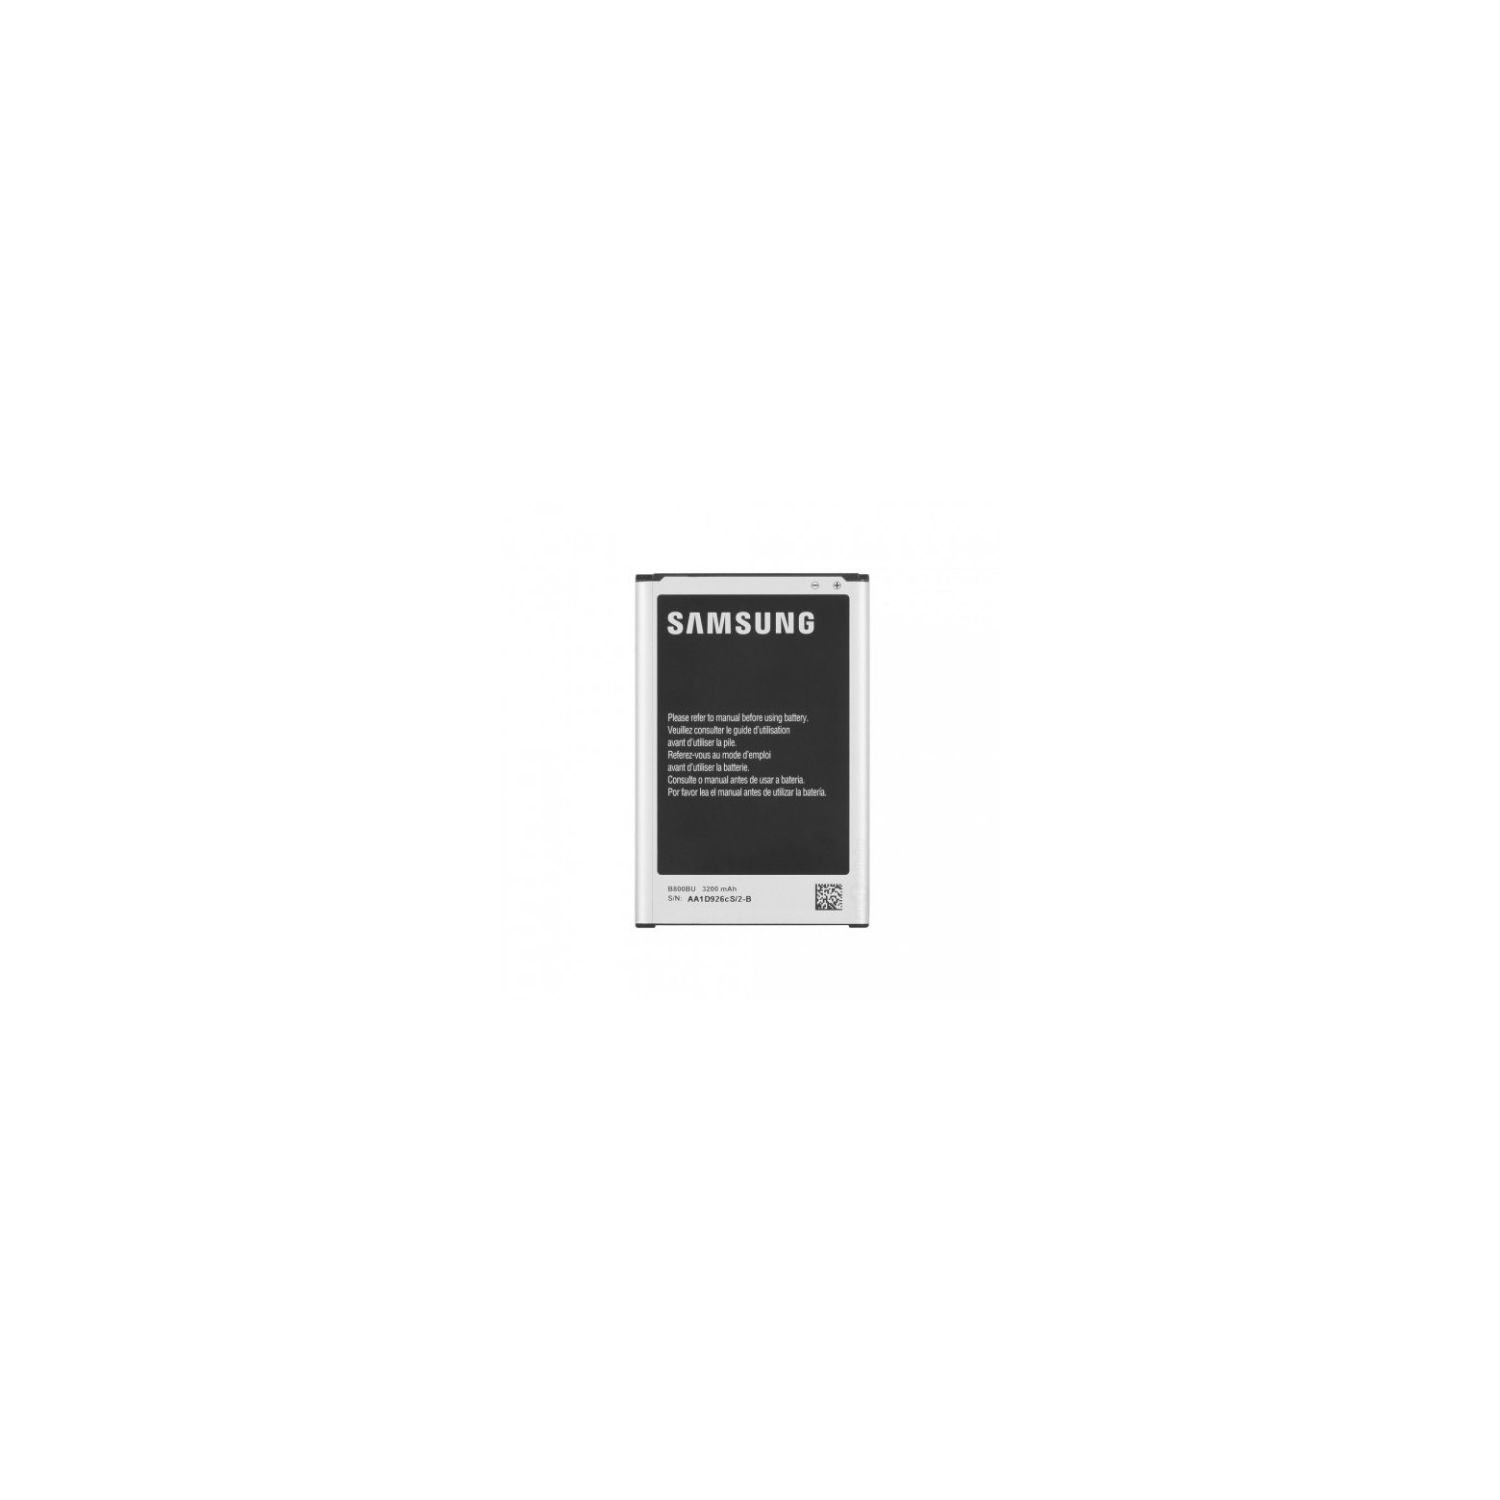 Samsung Galaxy Note 3 III Replacement Battery with NFC, N9000 N9005 B800BU B800BE B800BA